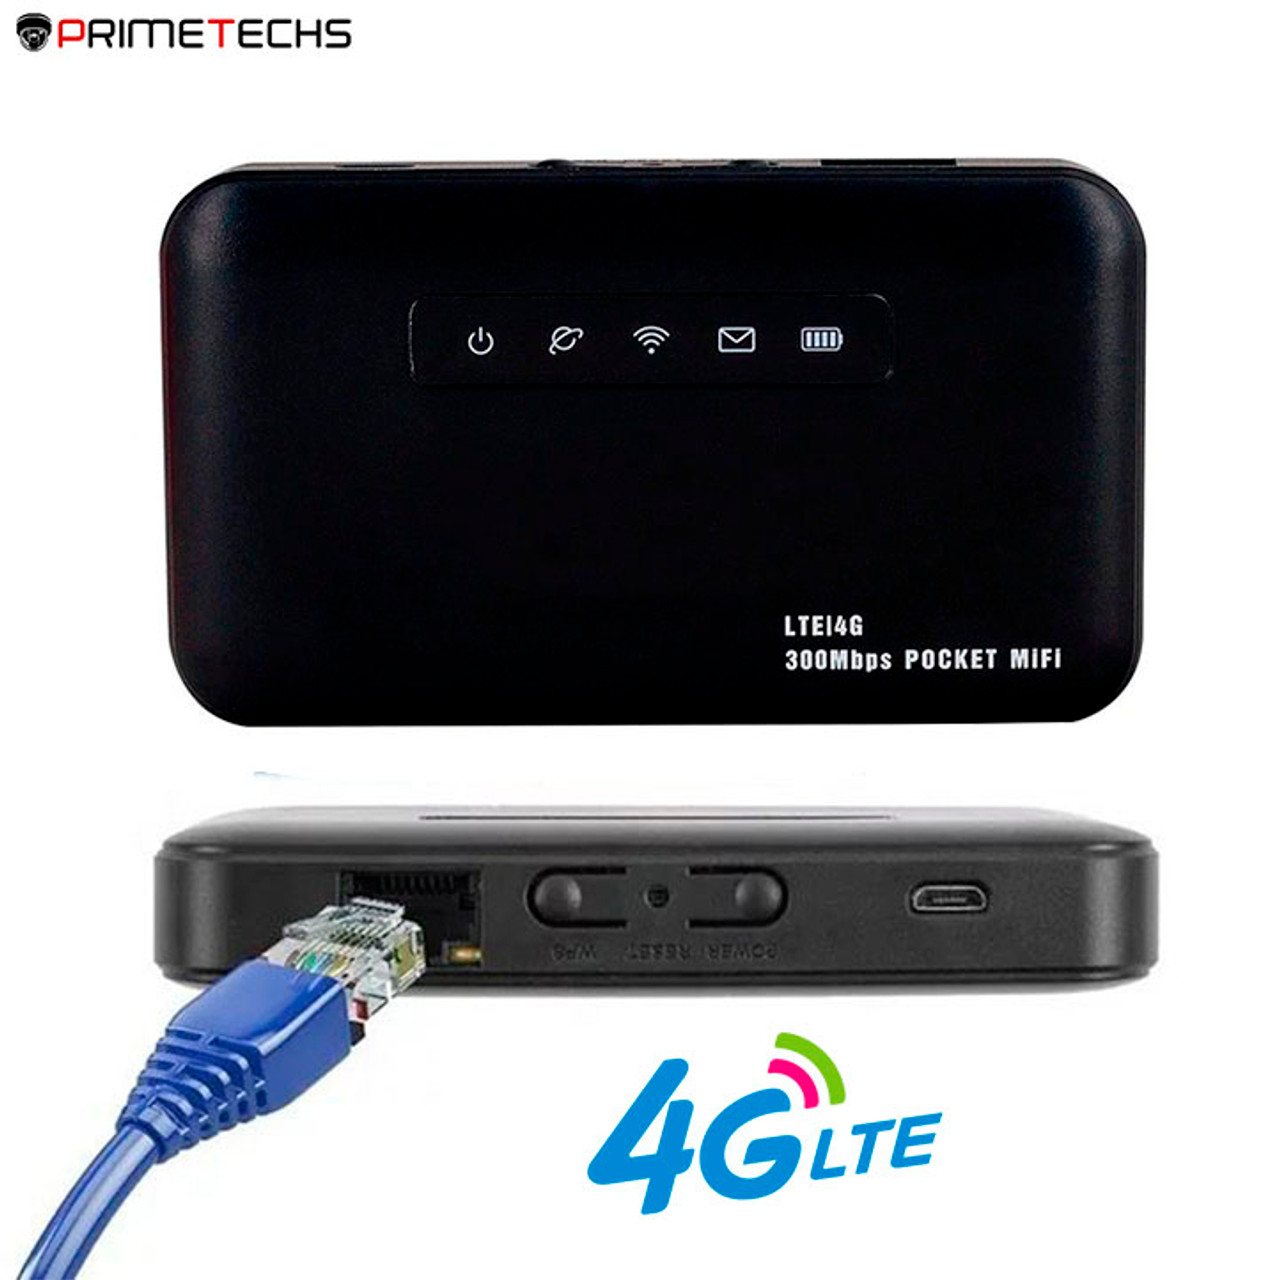 Internet Portatil PRIMETECHS, Enrutador Modem, MIFI, Internet Wi-Fi móvil,  SIM 4G LTE de cualquier compañía celular, 300 Mbps de velocidad, 1 Salida  RJ45 para conexión de PC o Switch de datos, Botón